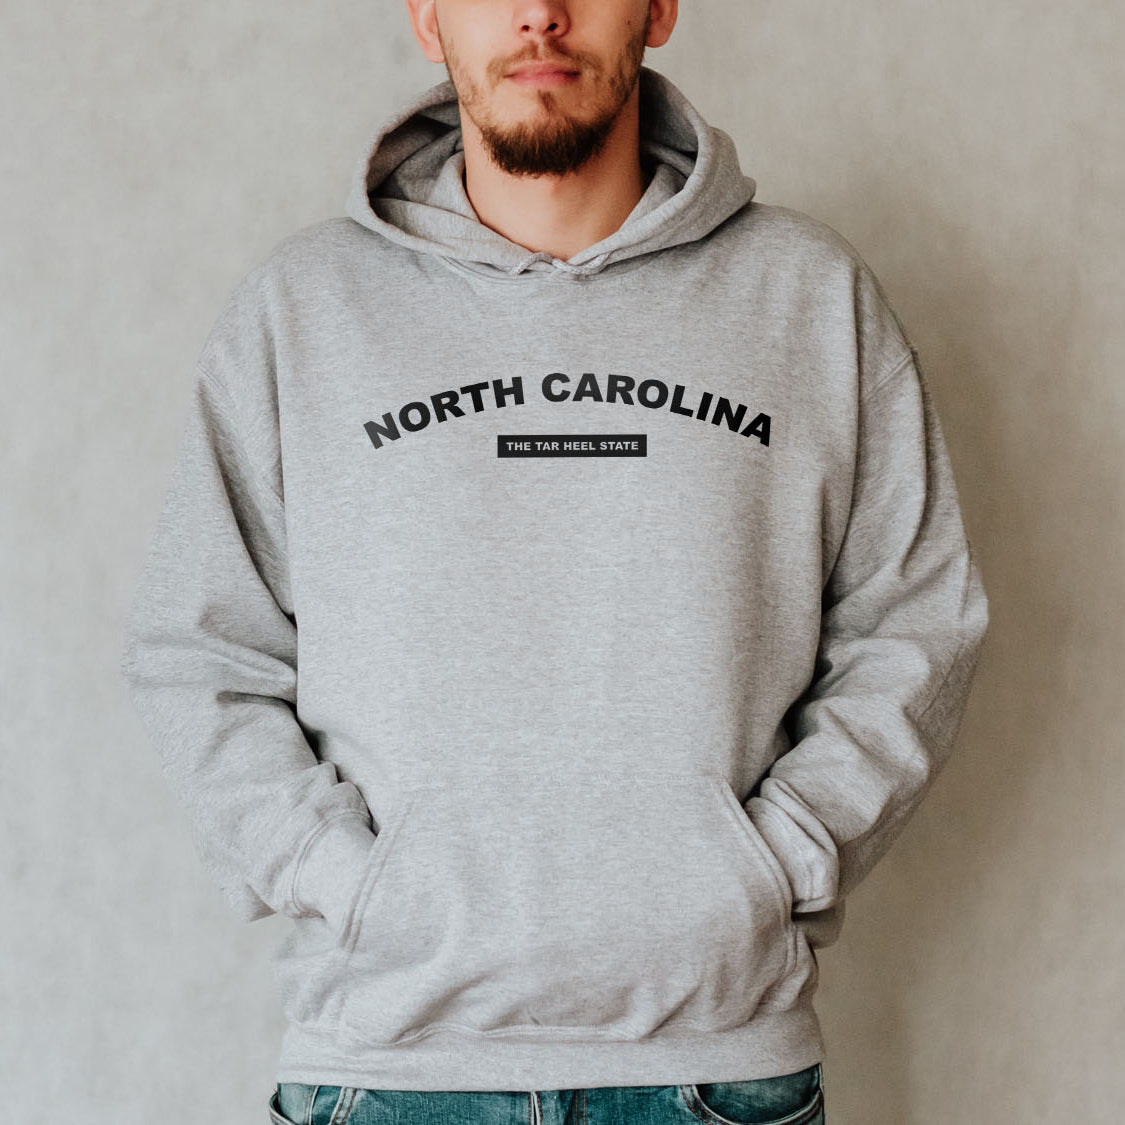 North Carolina The Tar Heel State Hoodie - United States Name & Slogan Minimal Design Printed Hoodie